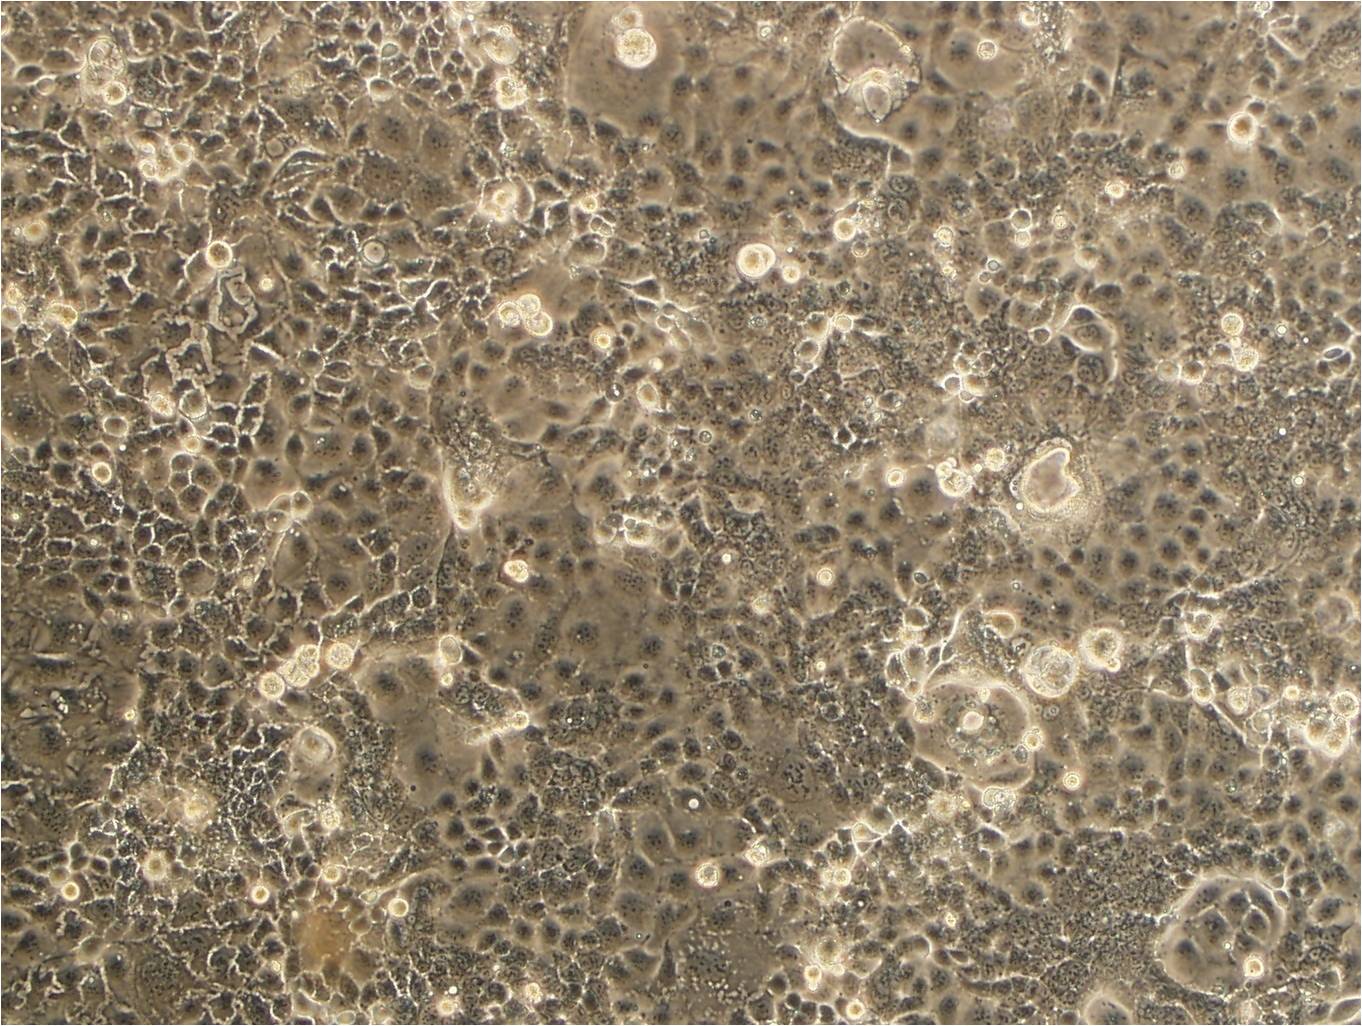 GCT epithelioid cells纤维组织瘤细胞系